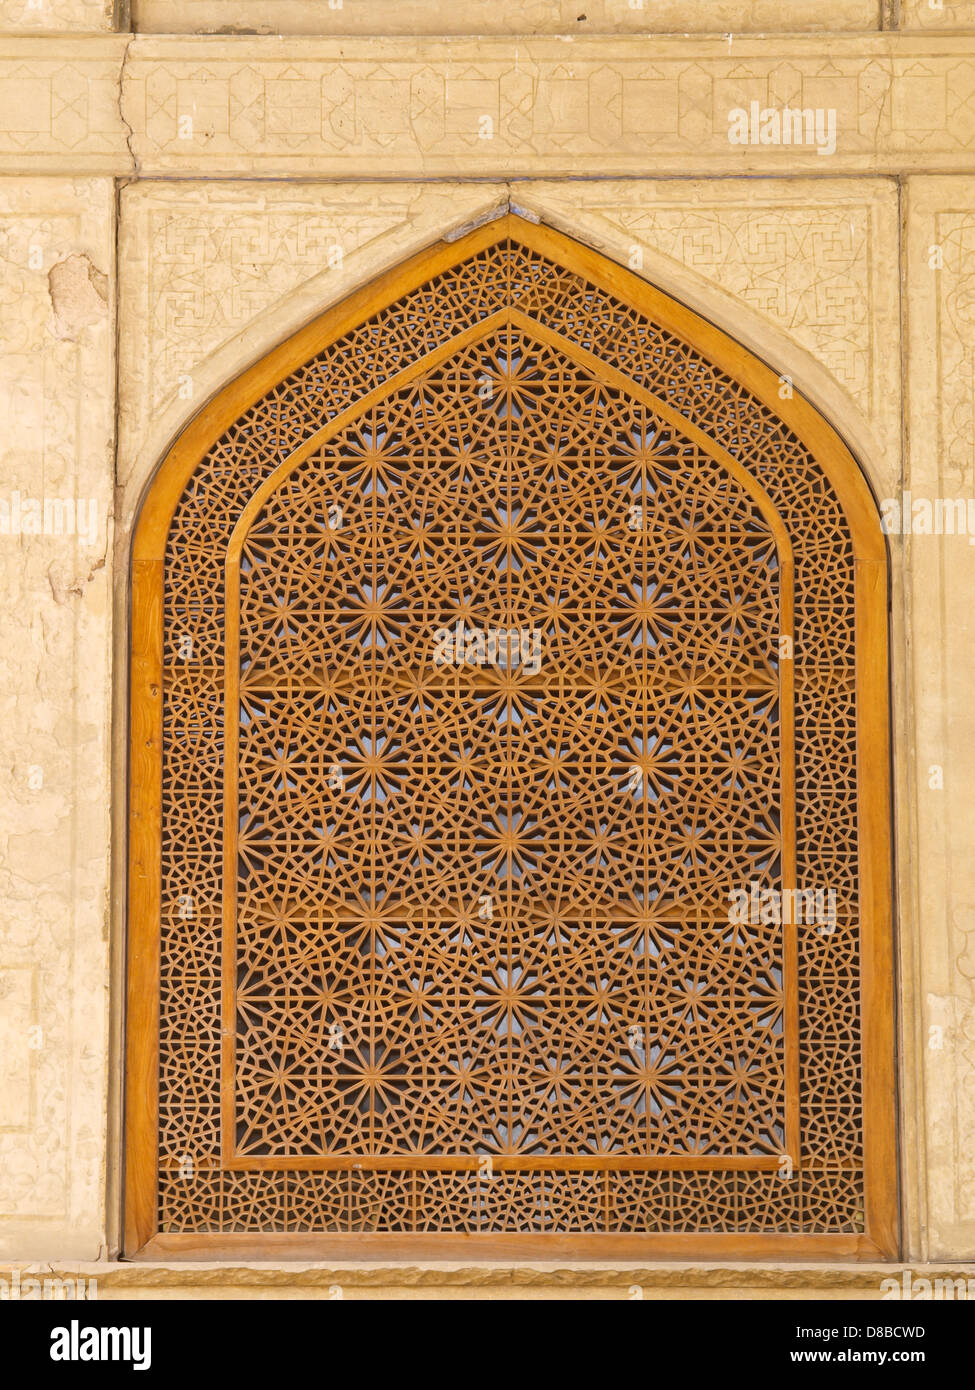 Islamic pattern woodern screen window in Chehel Sotoun (Sotoon) Palace built by Shah Abbas II, Isfahan, Iran Stock Photo